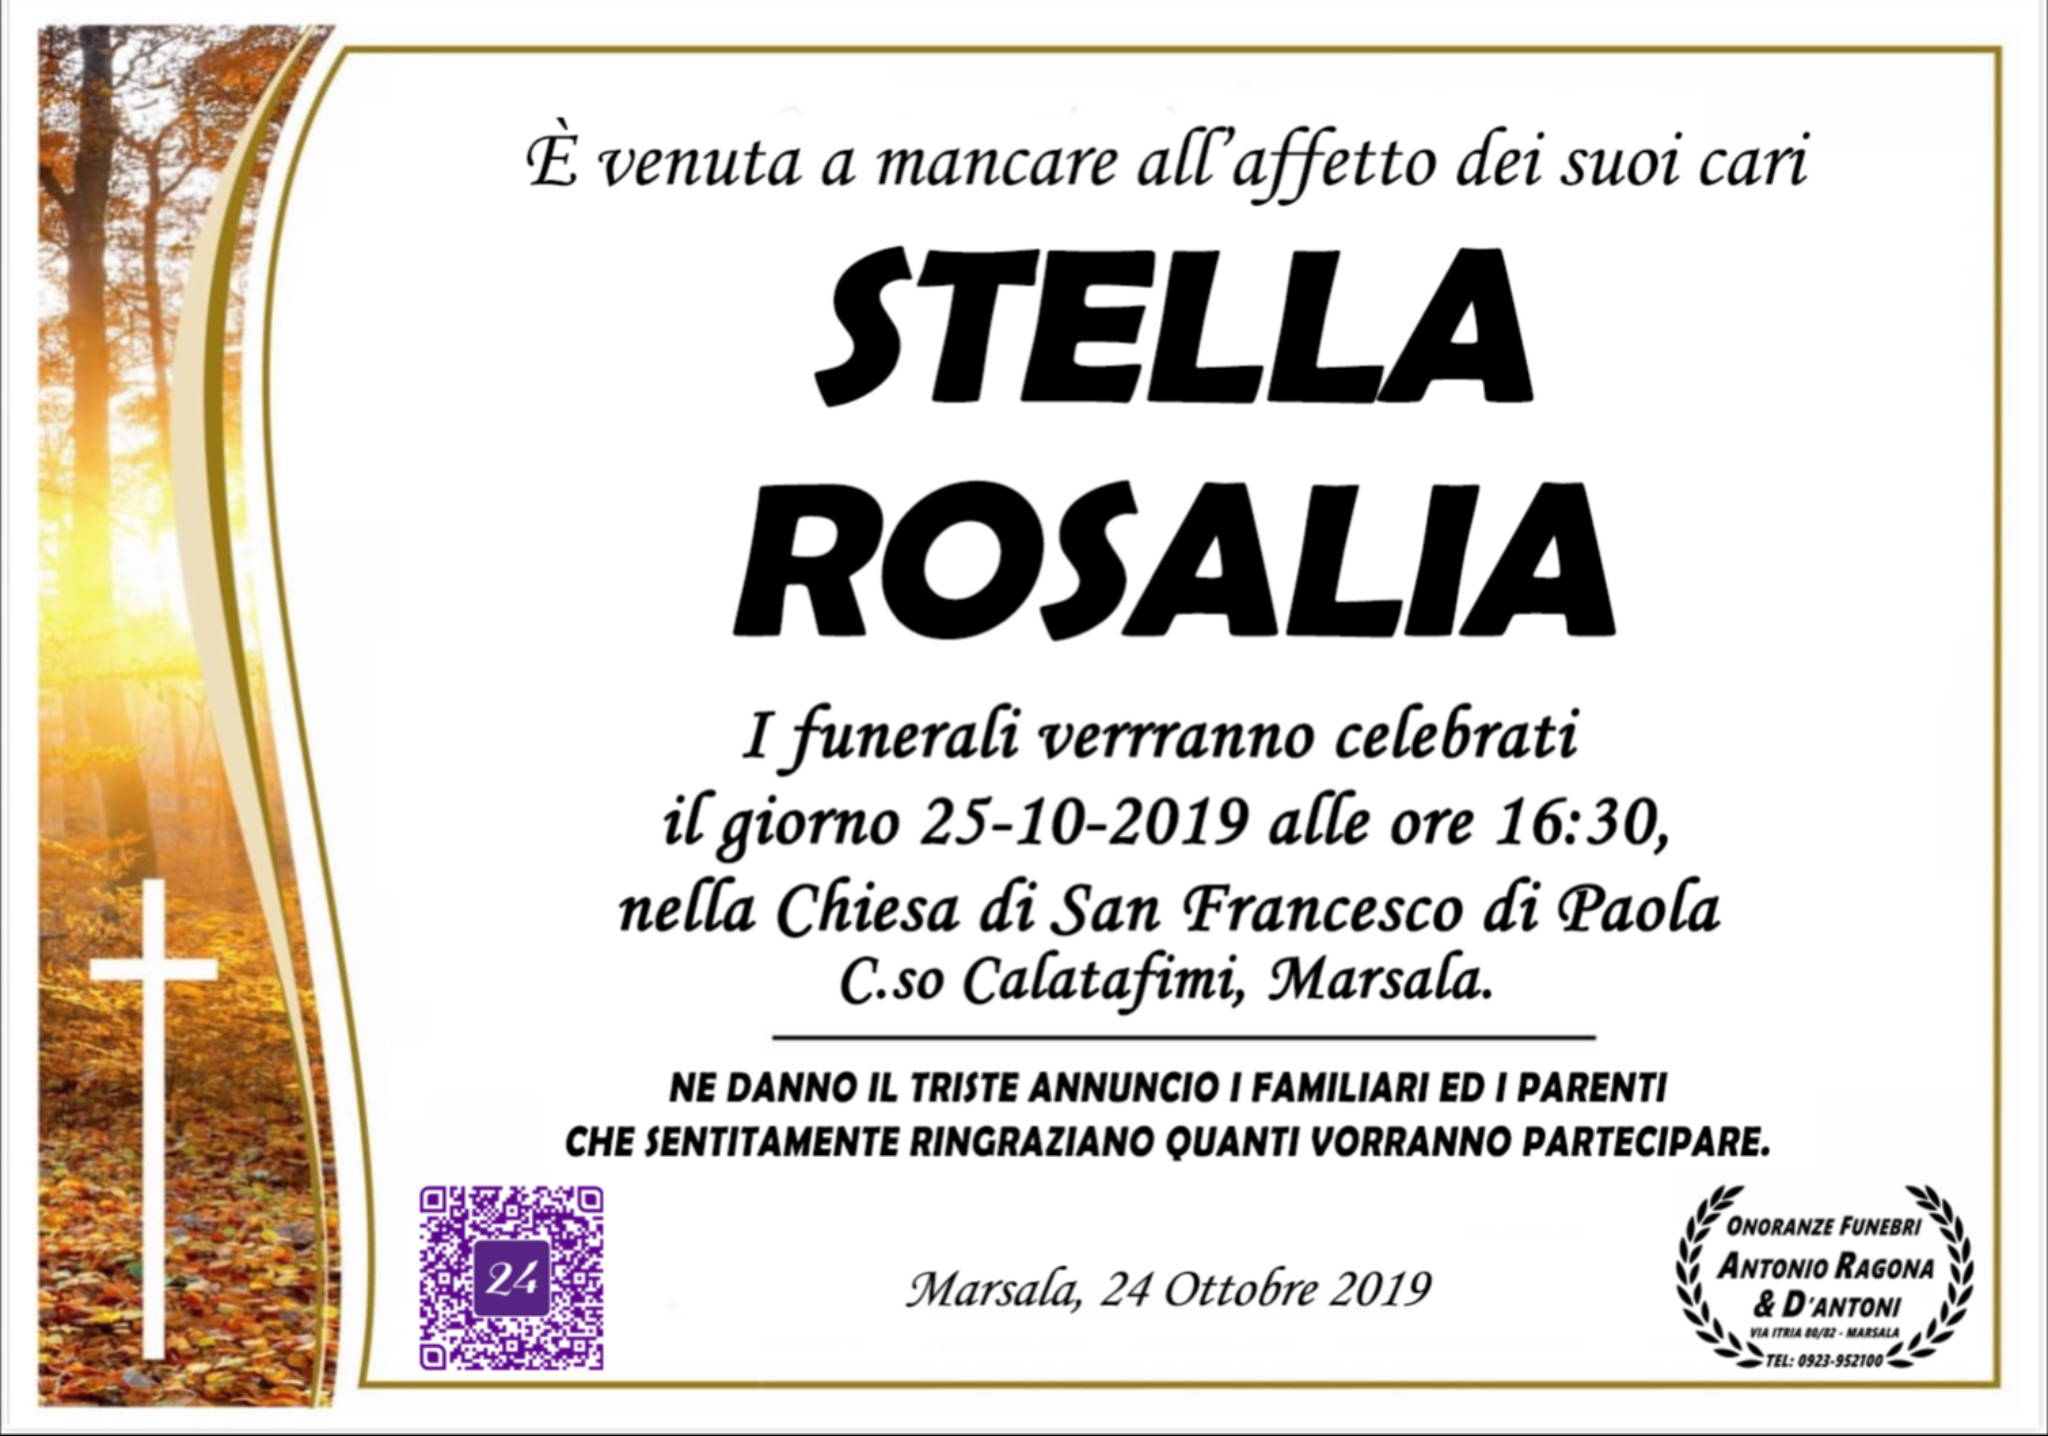 Rosalia Stella